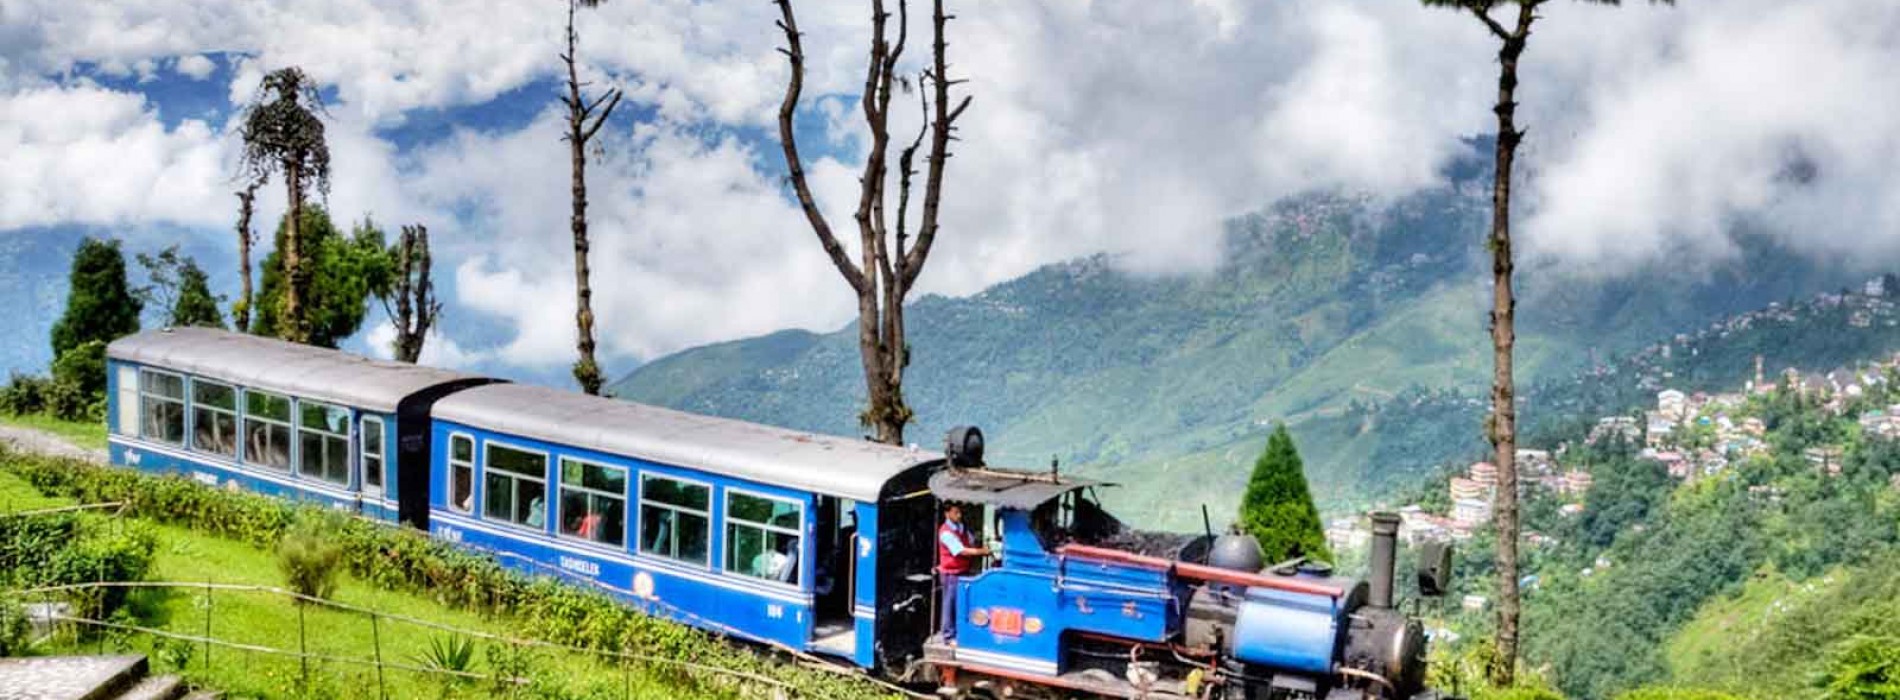 Railways steps in after UNESCO warns Darjeeling toy train off track